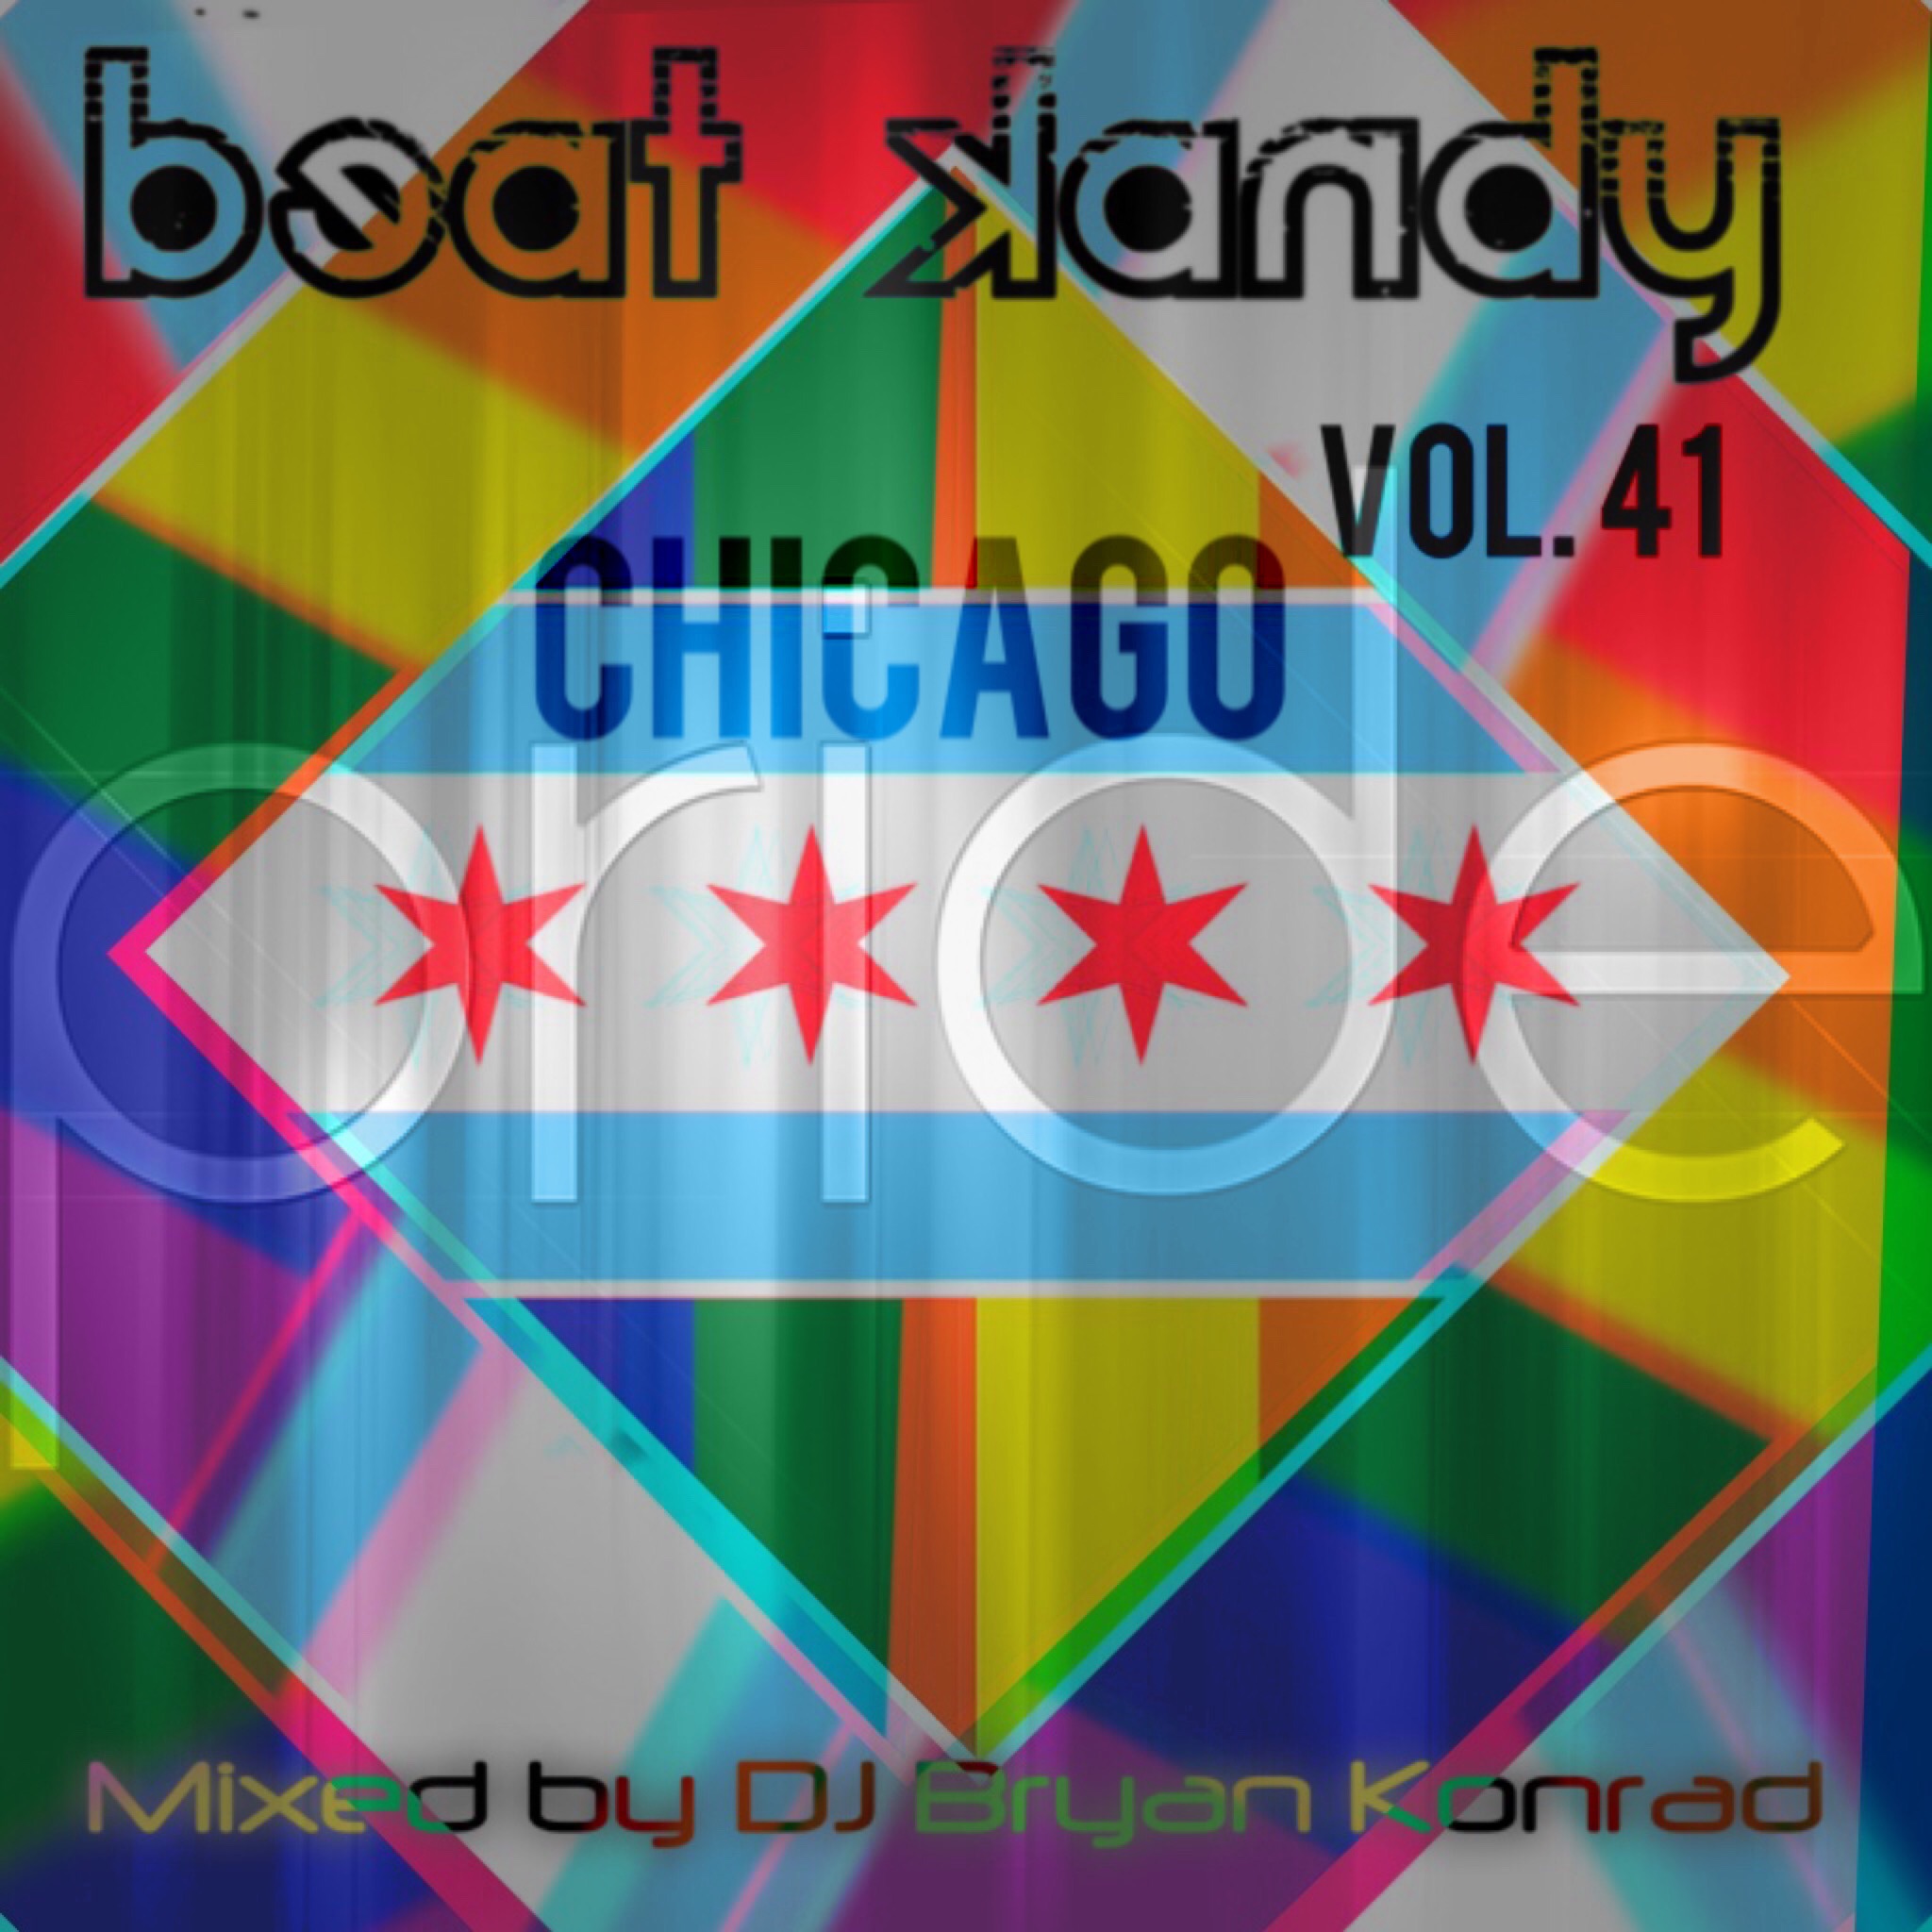 Beat Kandy Vol. 41 [Part 1] (Pride 2017)